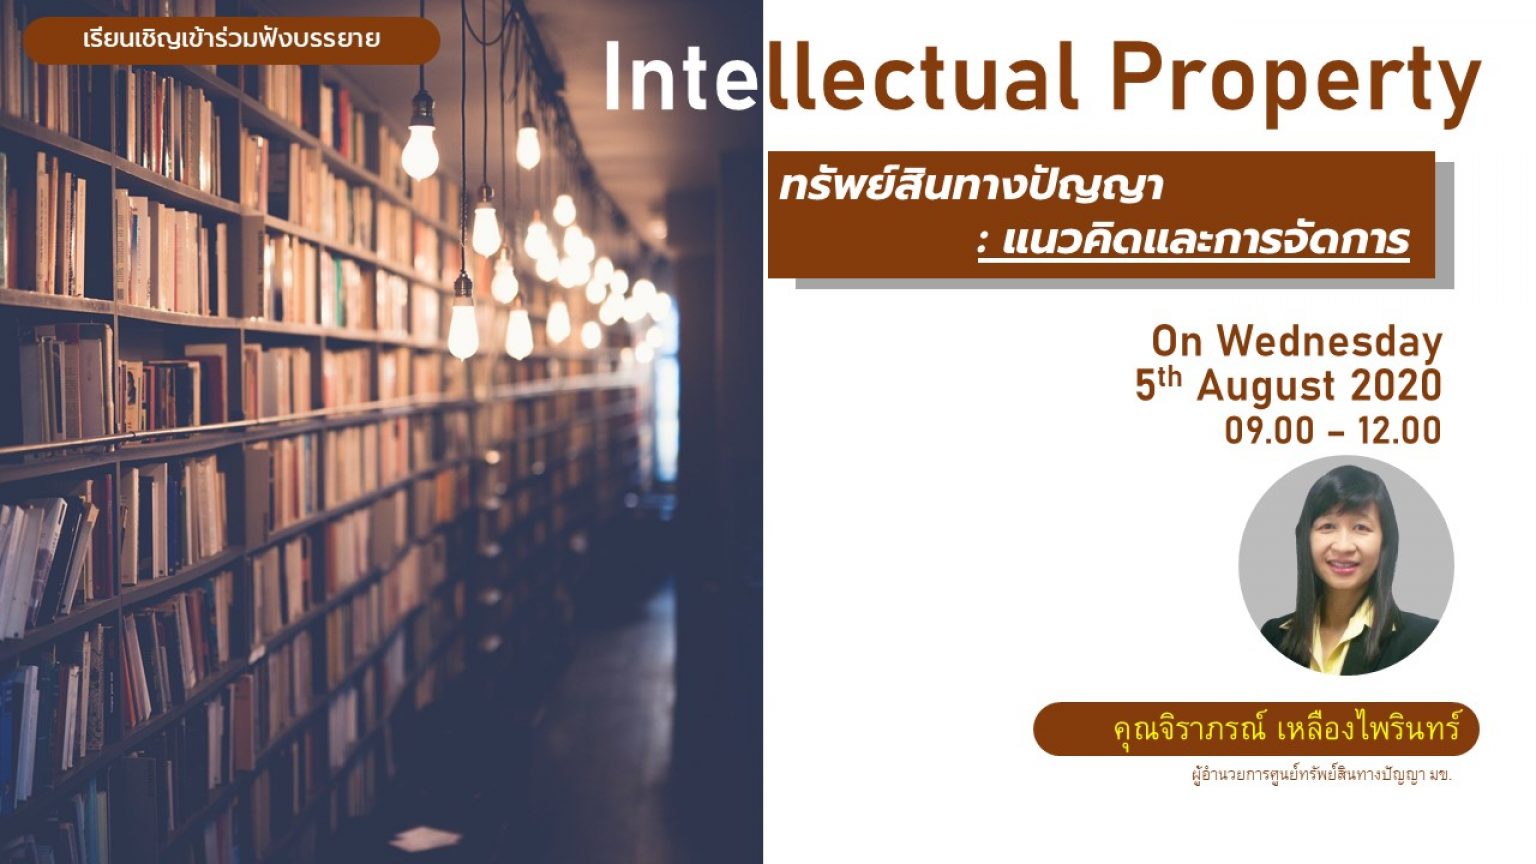 Intellectual Property “ทรัพย์สินทางปัญญา:แนวคิดและการจัดการ”